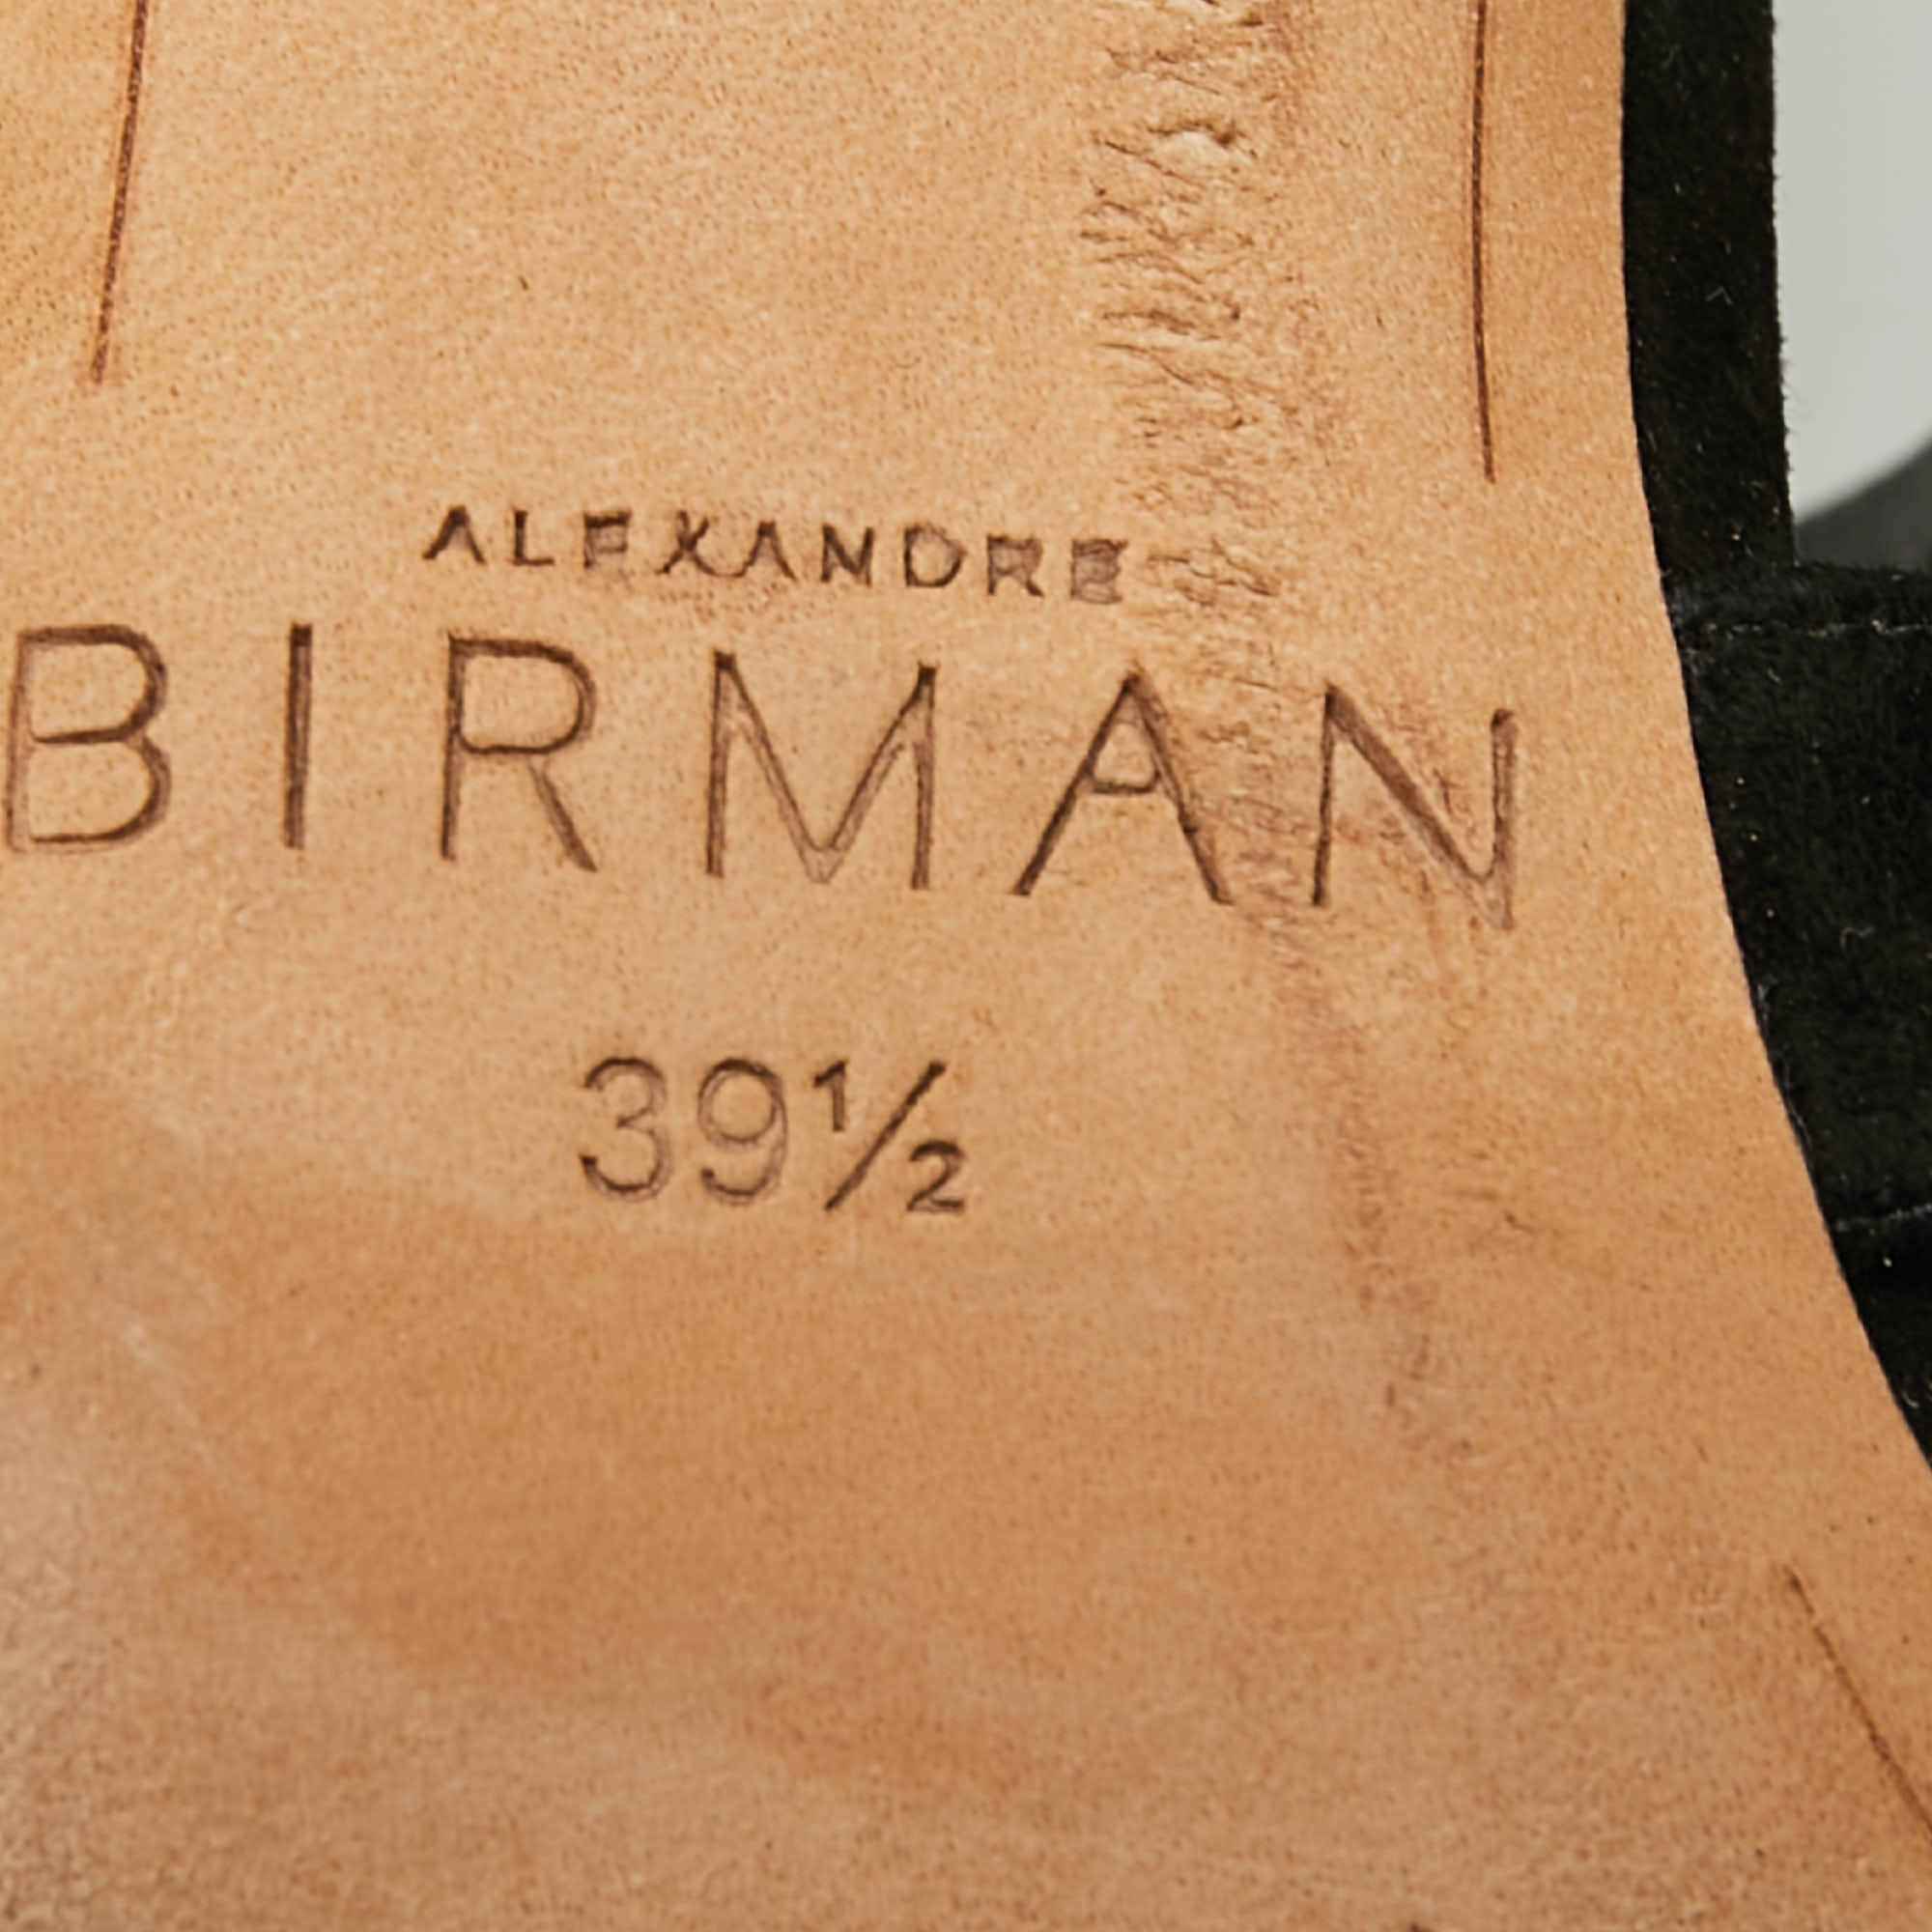 Alexandre Birman Black Suede Elenara Ankle Strappy Tie Up Sandals Size 39.5